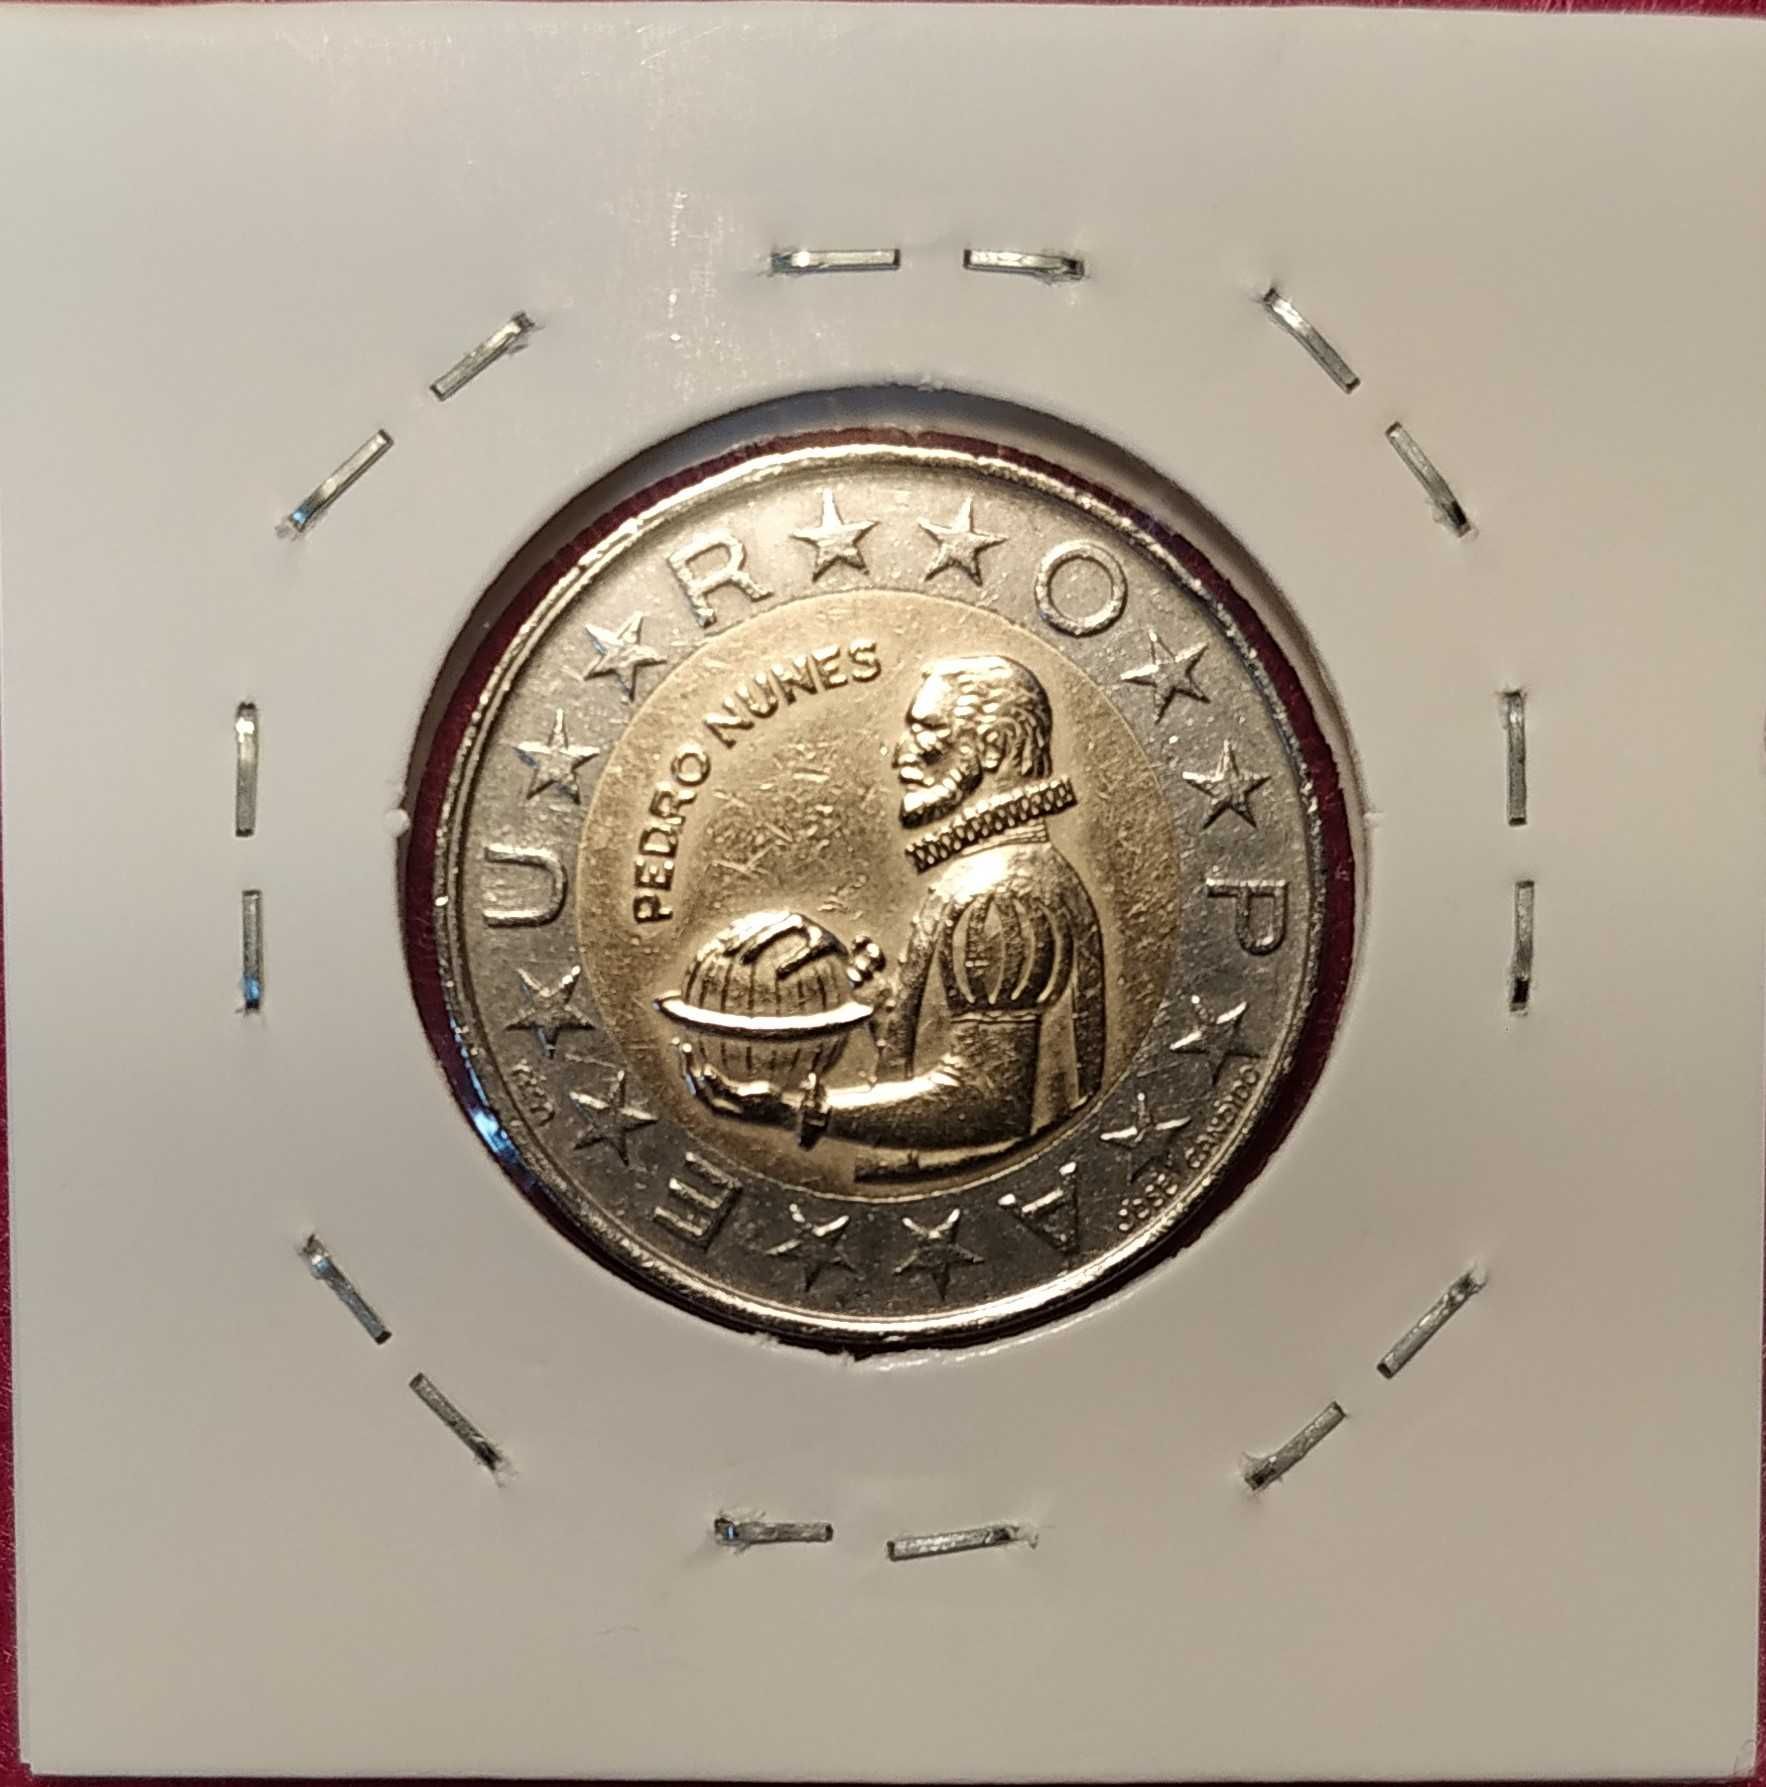 Moeda de 100 escudos de 1991 com 12 sectores no rebordo